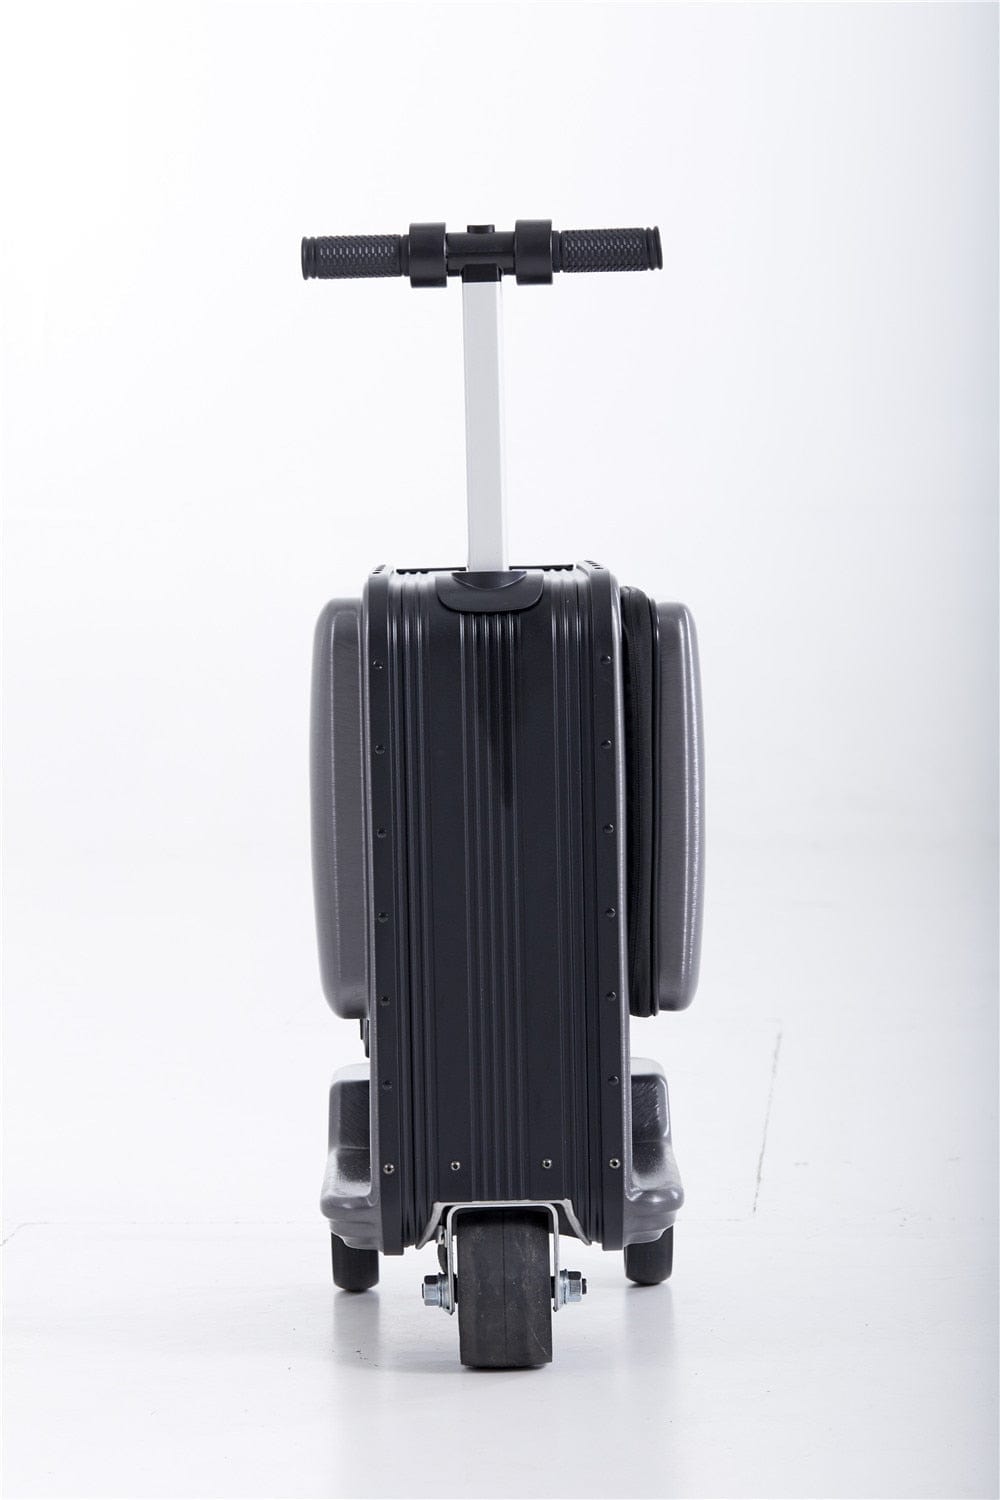 HomeBound Essentials AirWheel - Smart Riding Scooter Traveling Suitcase